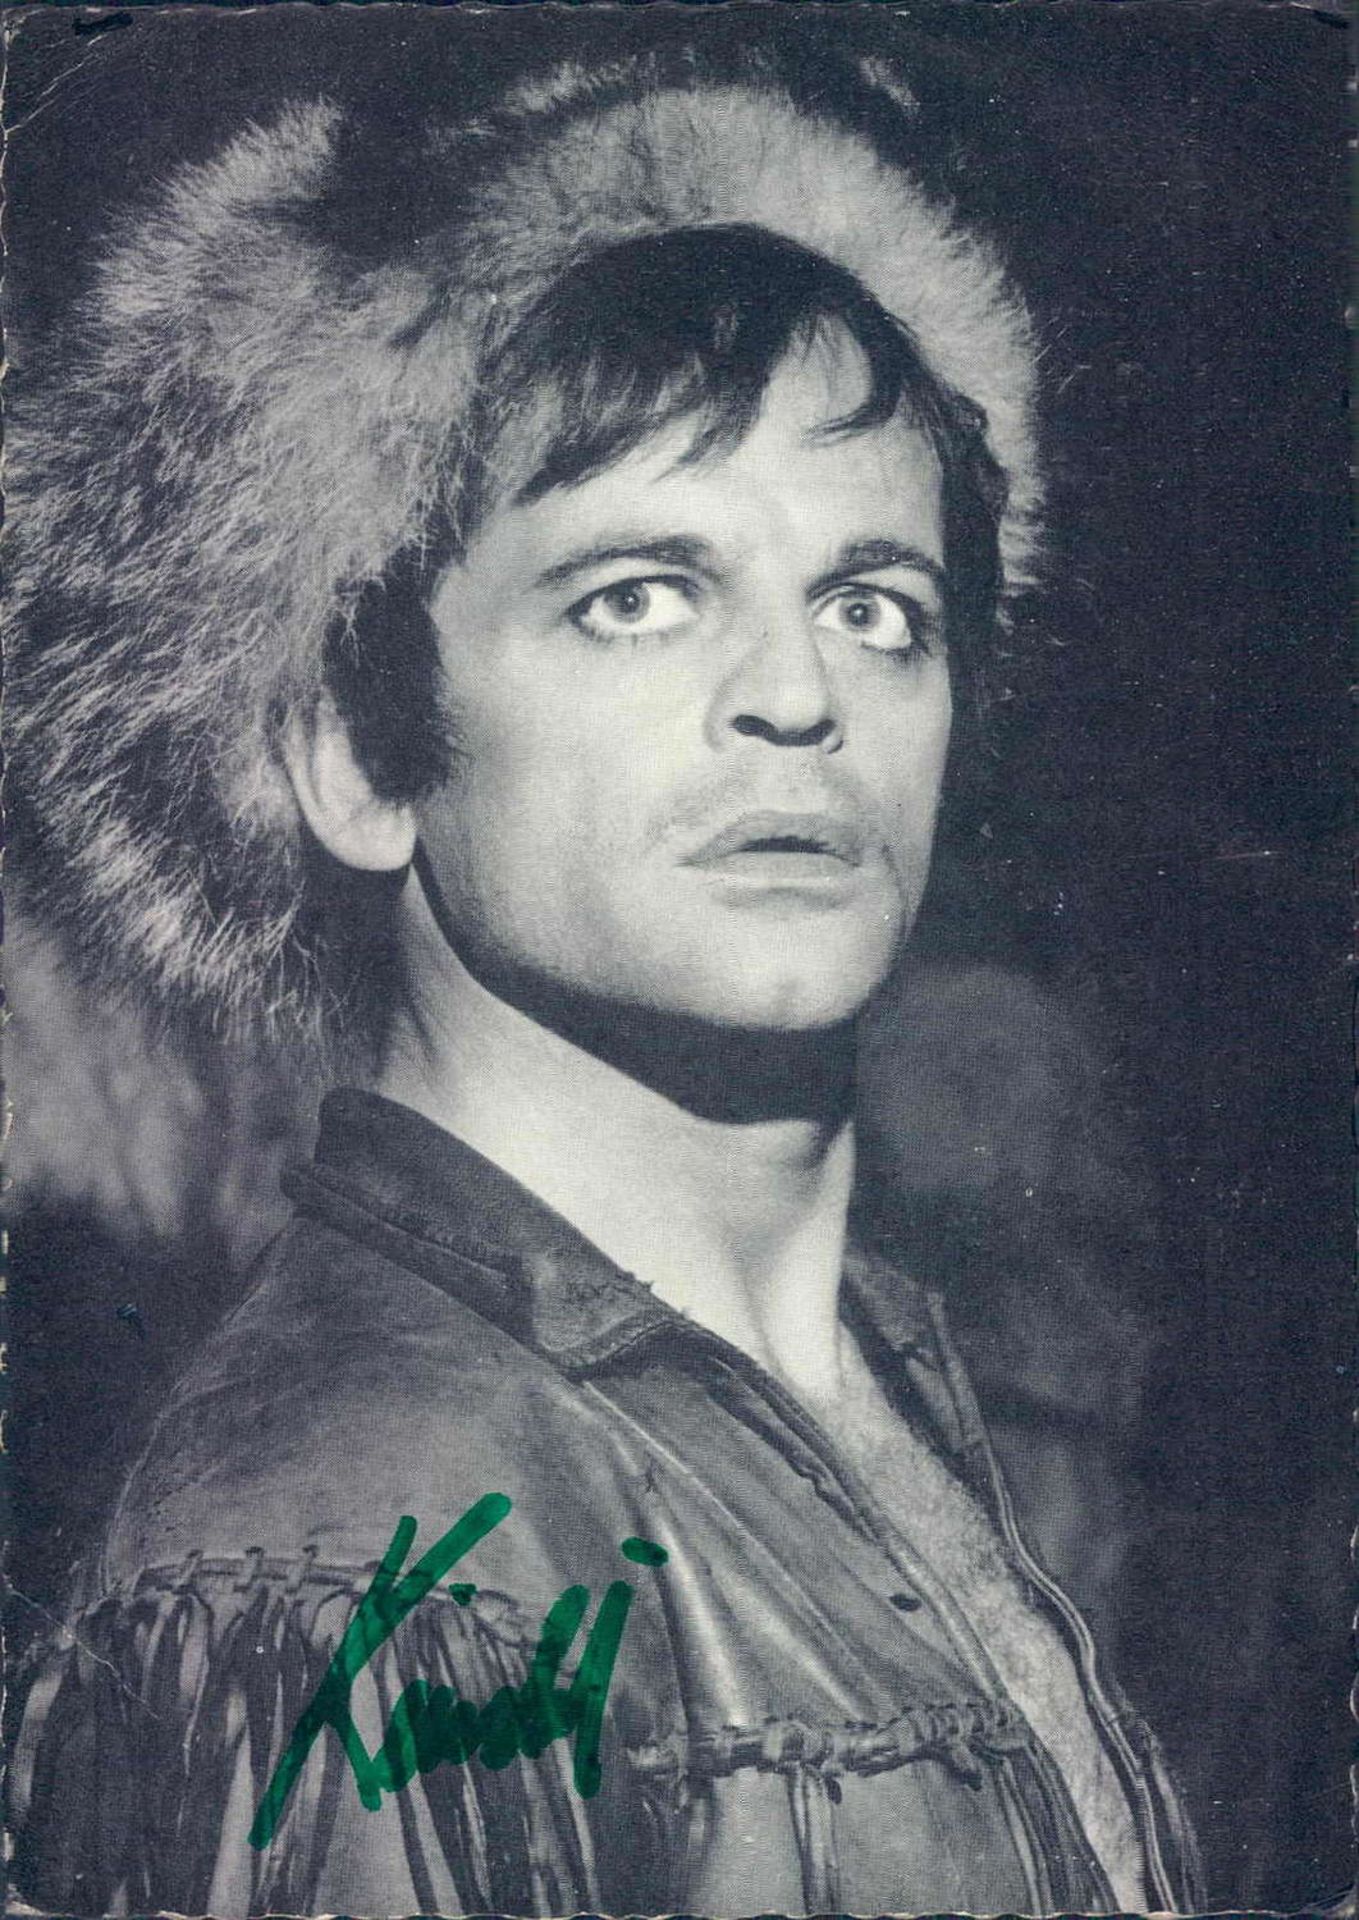 Autogramm - Post - Karte Klaus Kinski. Original Signatur.Autograph - Post - Card Klaus Kinski.